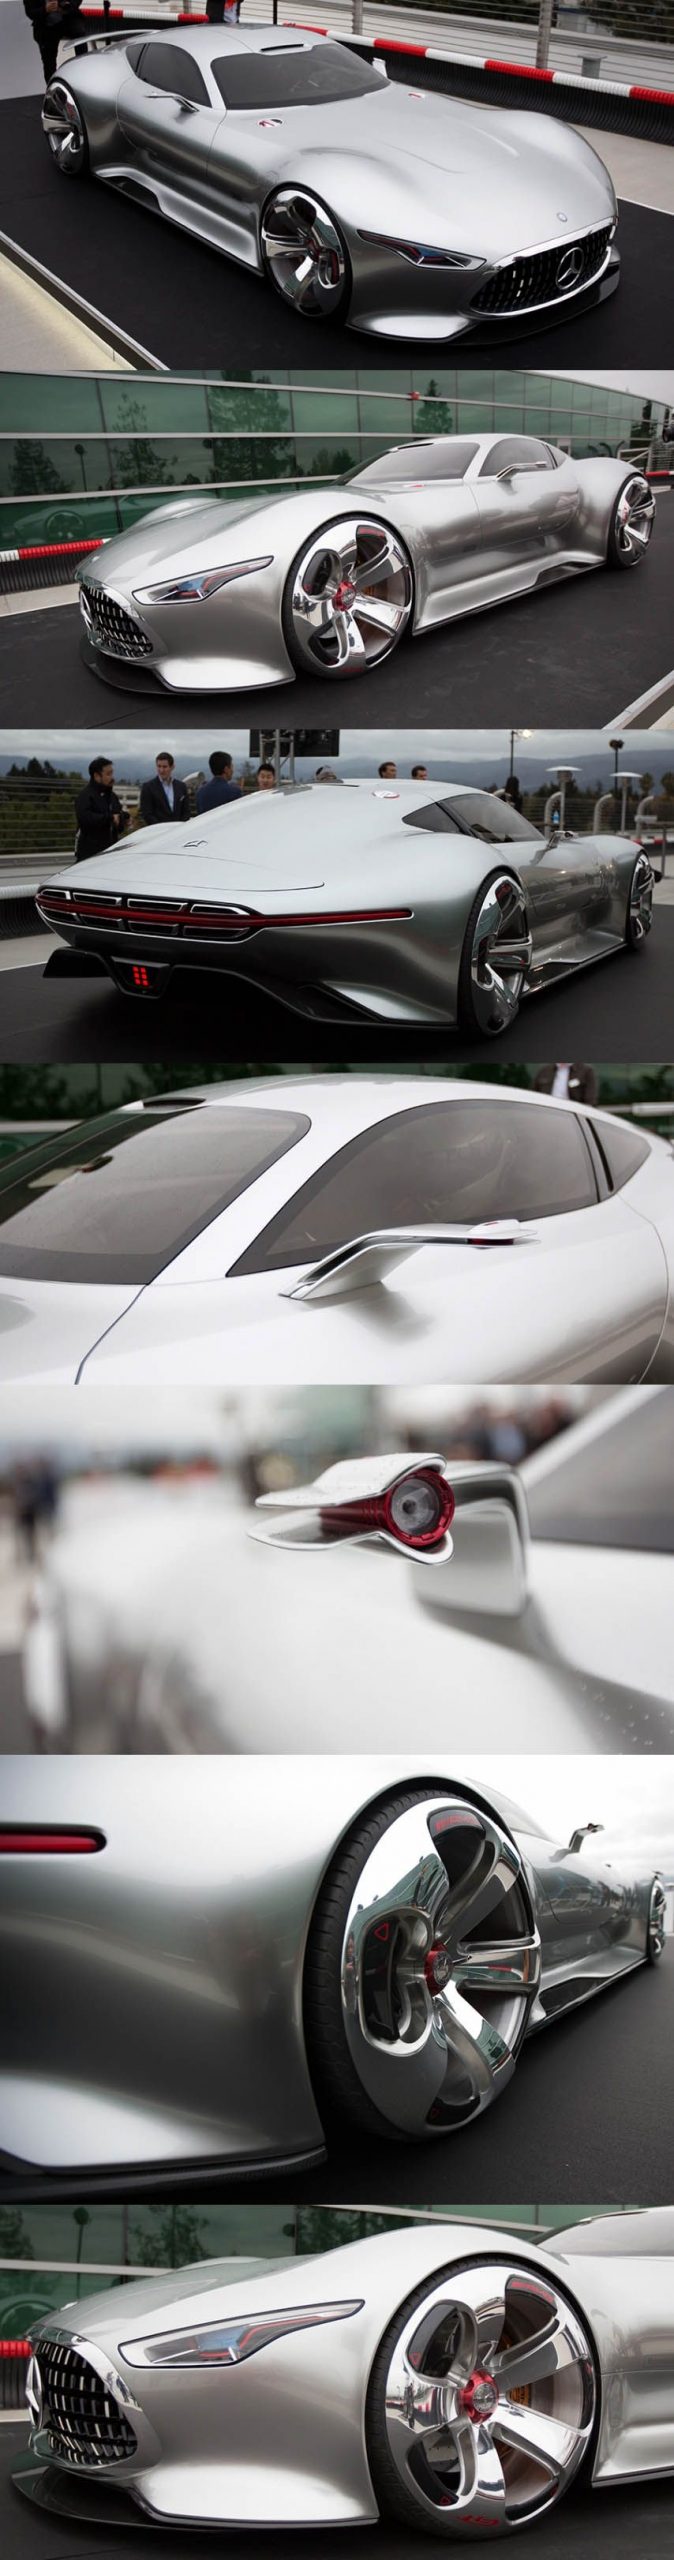 Mercedes-AMG Vision Gran Turismo concept